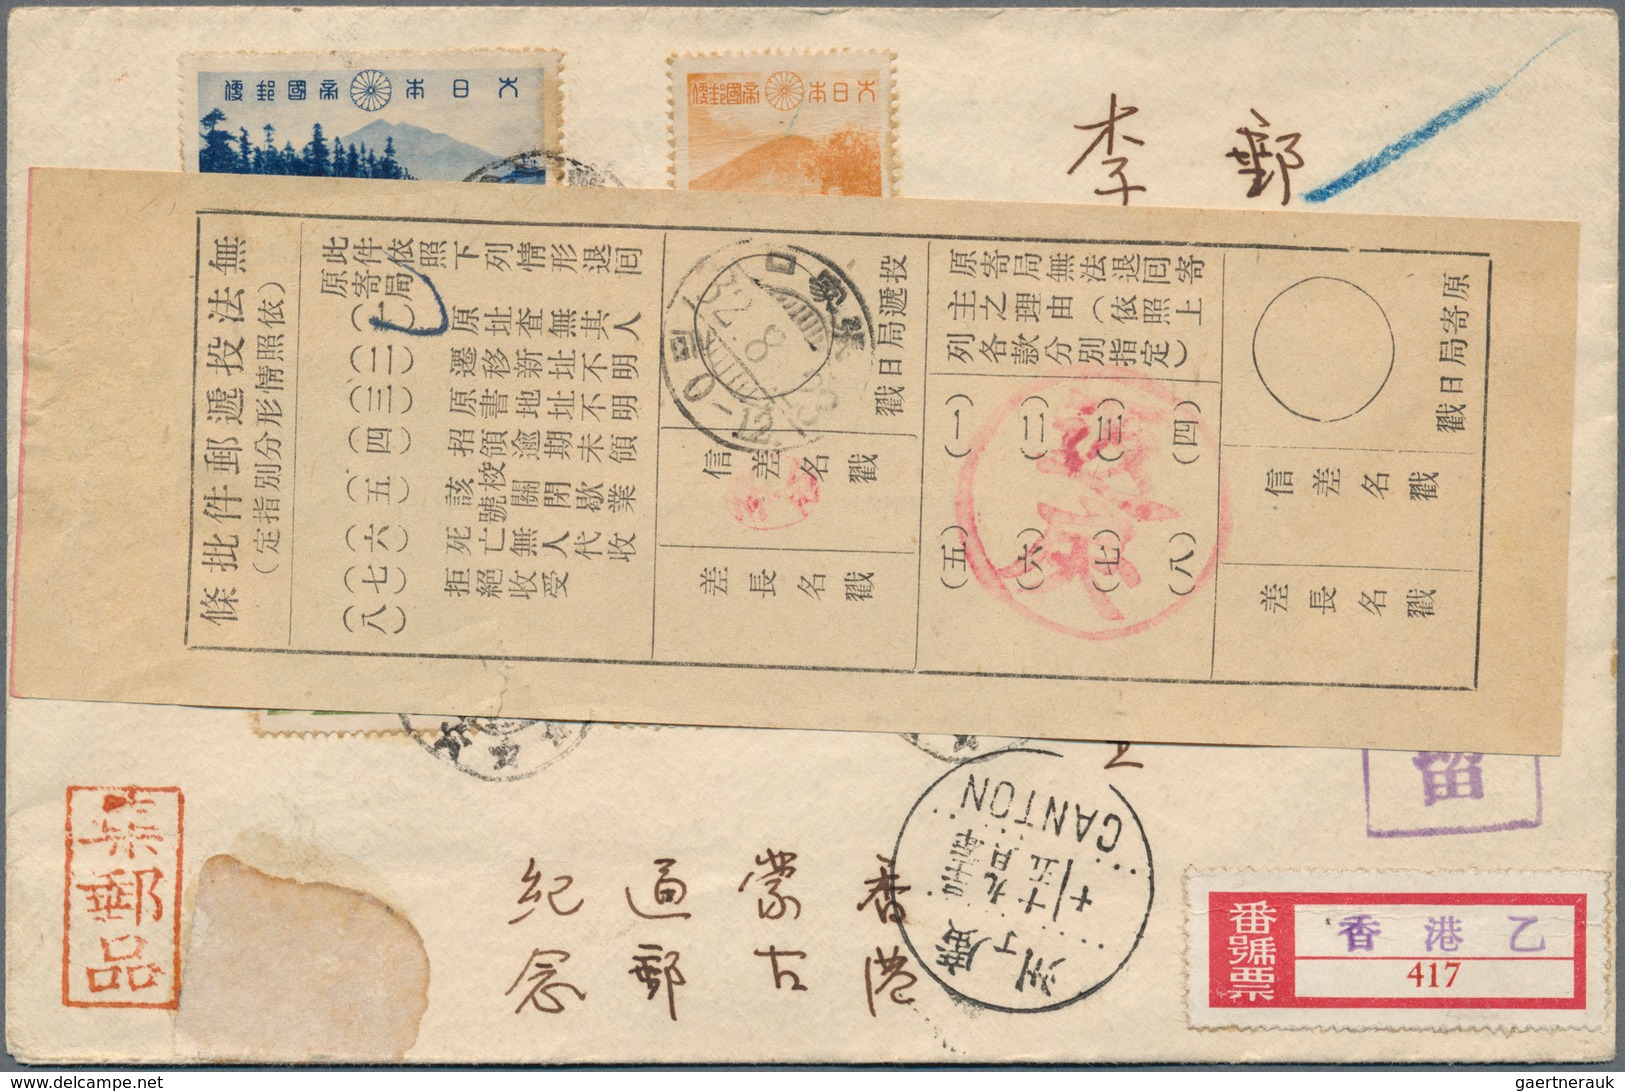 Japan: 1939/43, Nikko NP Set Tied "Hong Kong 18.8.1" (August 1, 1943) To Registered Cover To "Mr. Li - Gebraucht